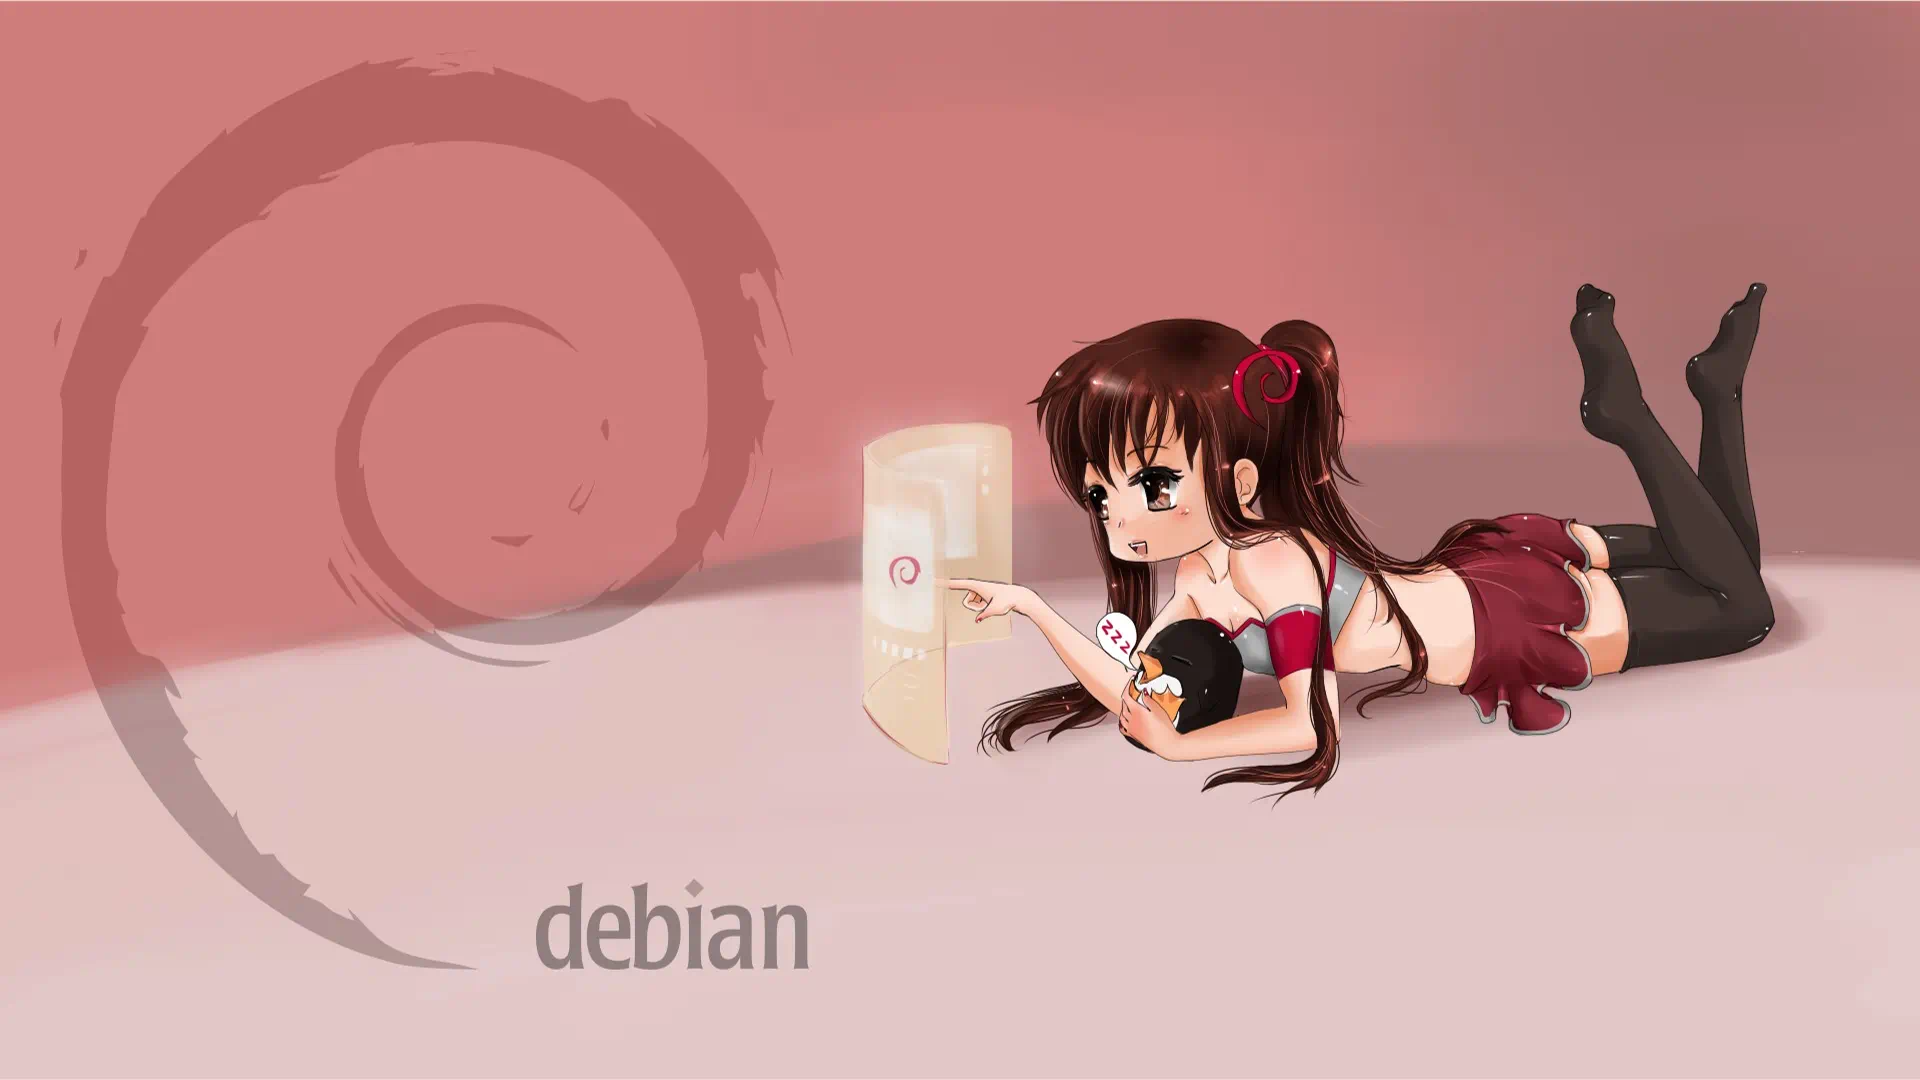 Useful tips for Debian based distros